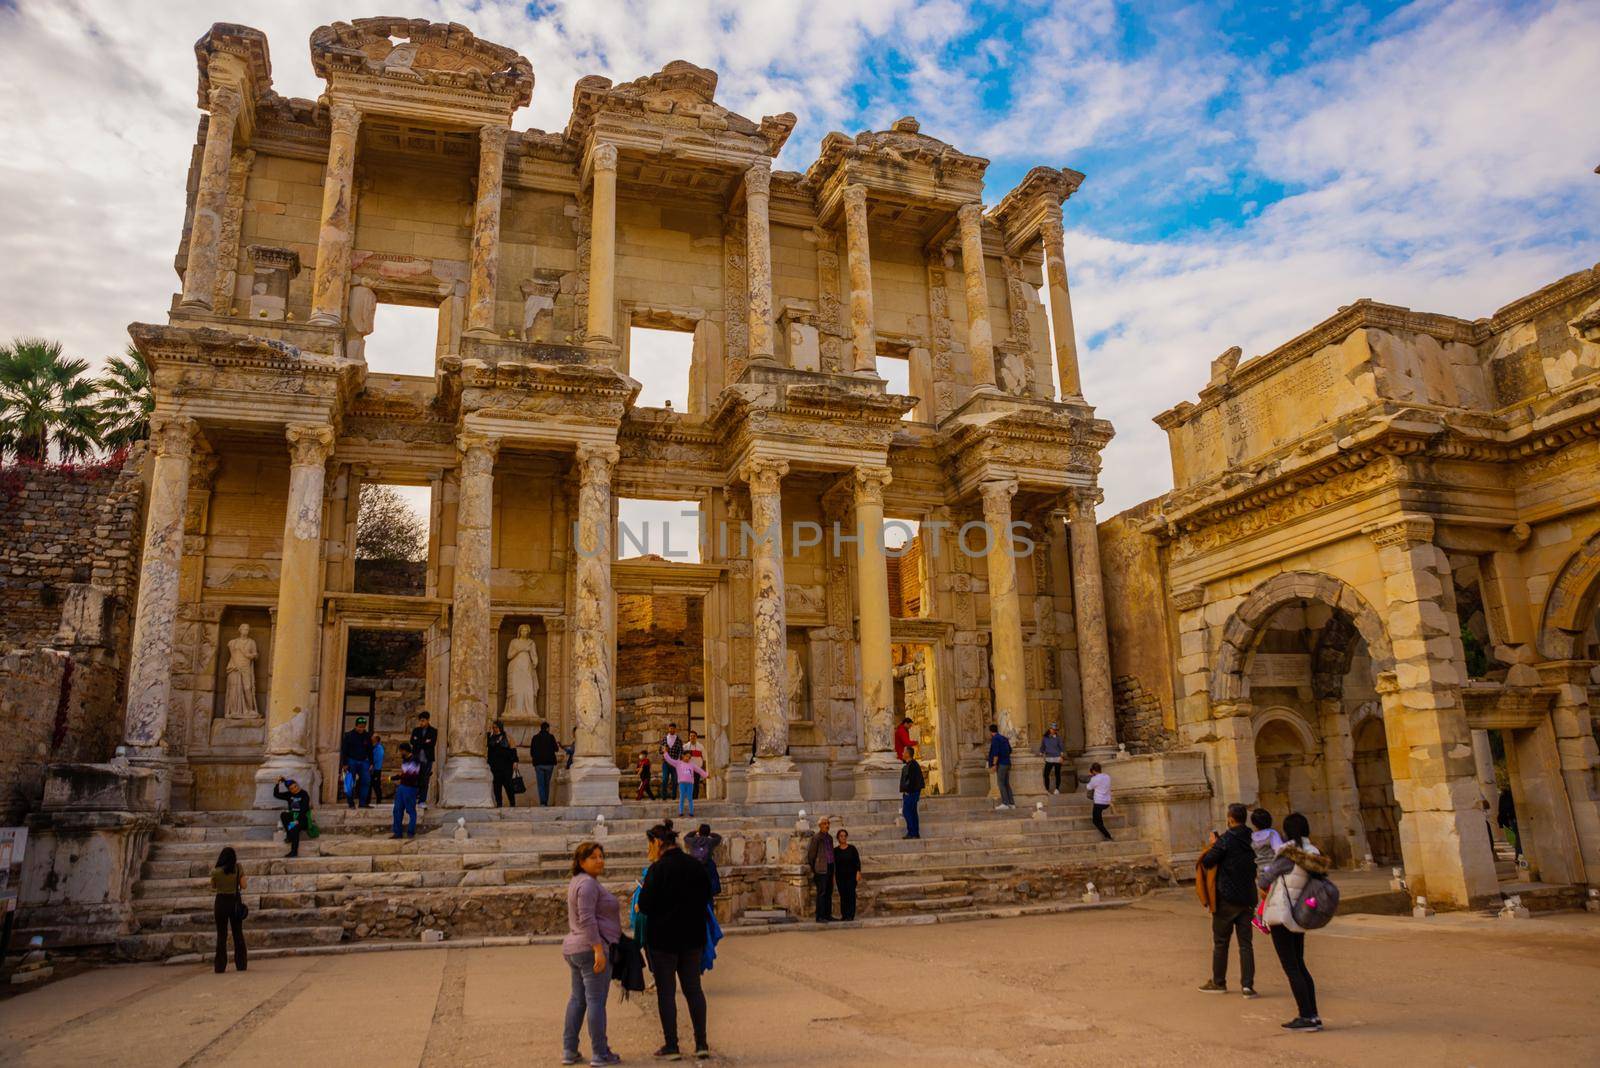 EPHESUS, TURKEY: Celsius Library in ancient city Ephesus. Most visited ancient city in Turkey. by Artamonova